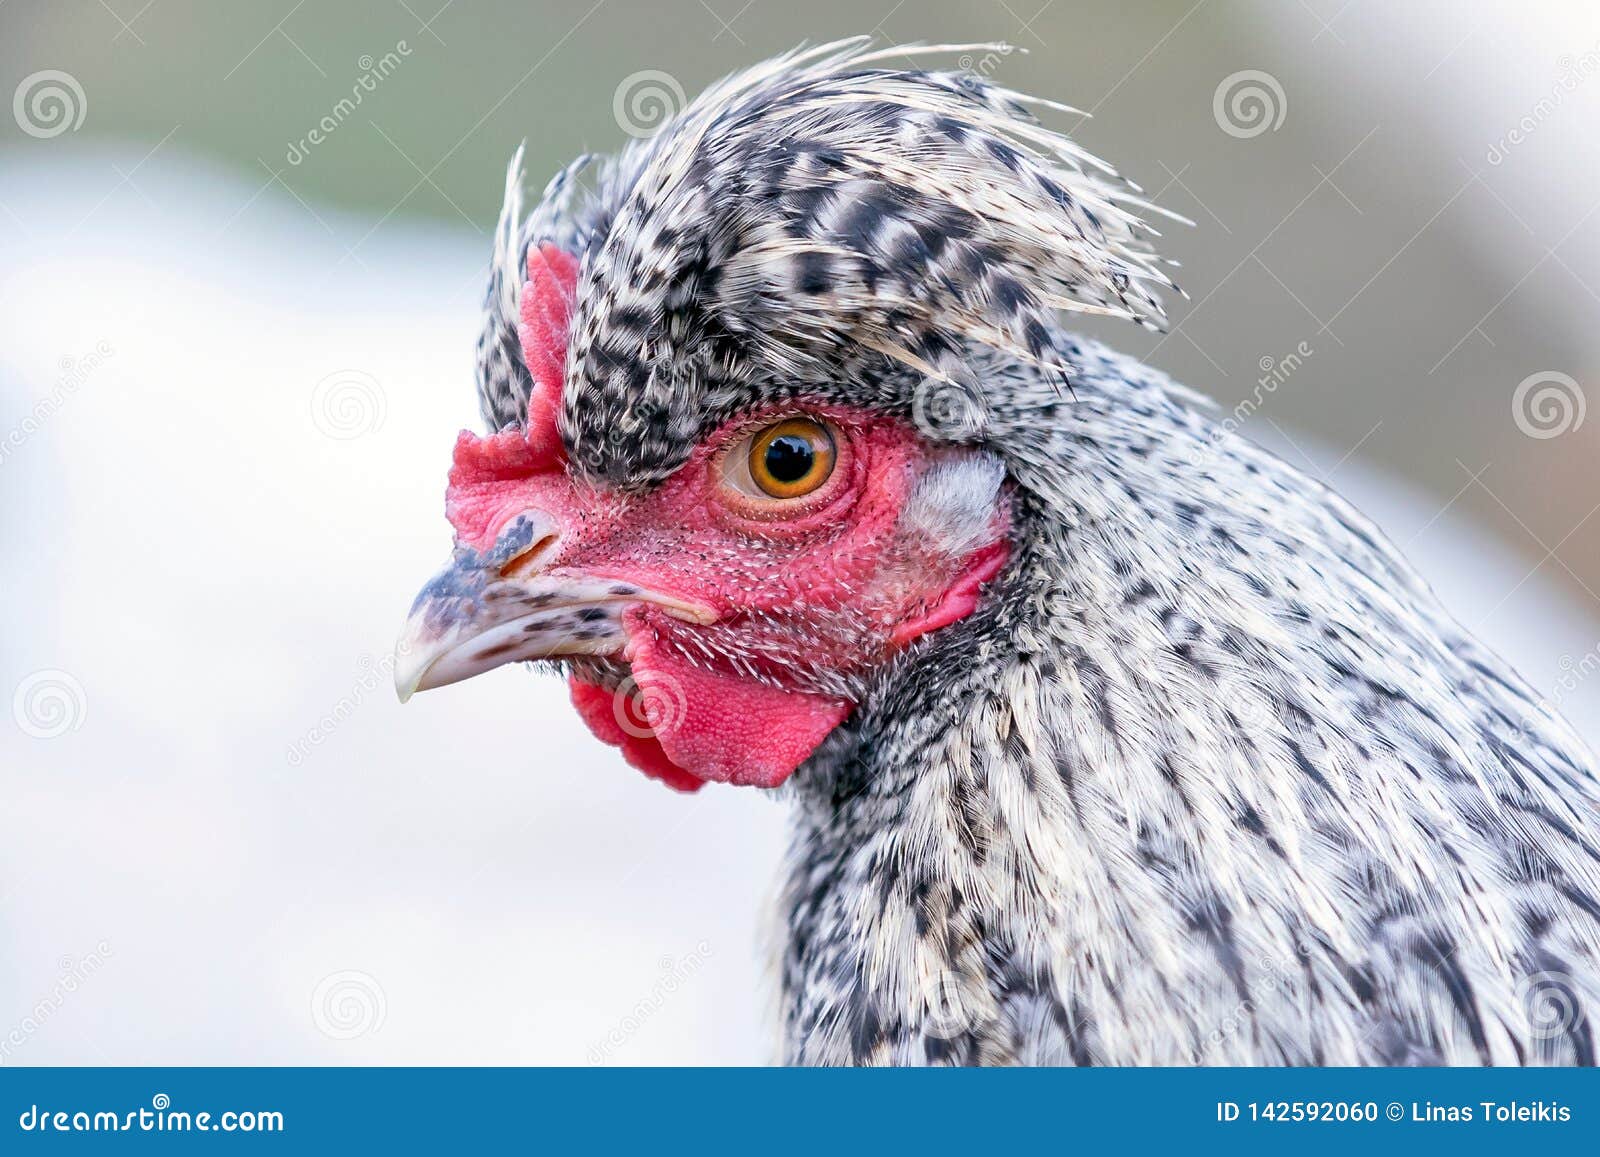 hen with big topknot profile portrait